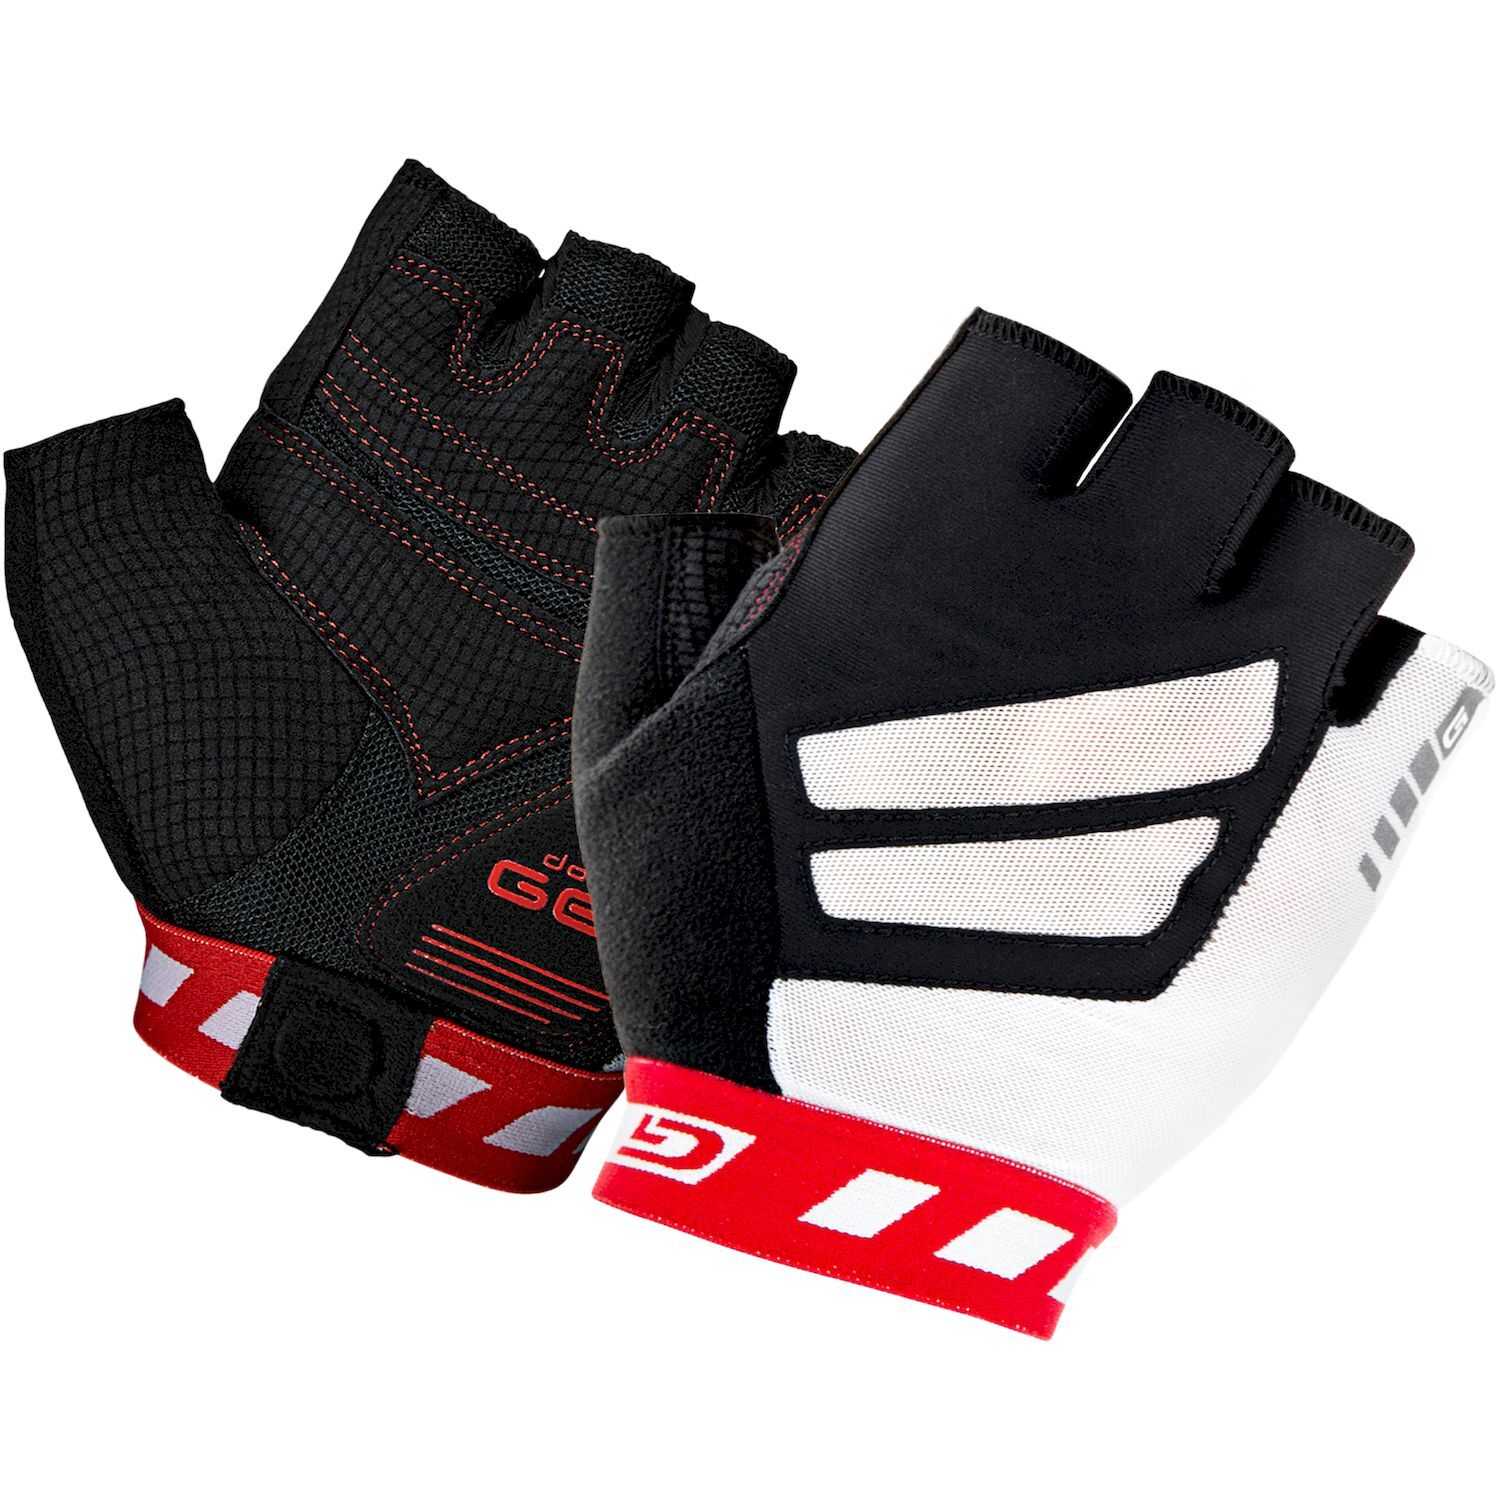 Grip Grab WorldCup Padded Gloves - Short finger gloves - Men's